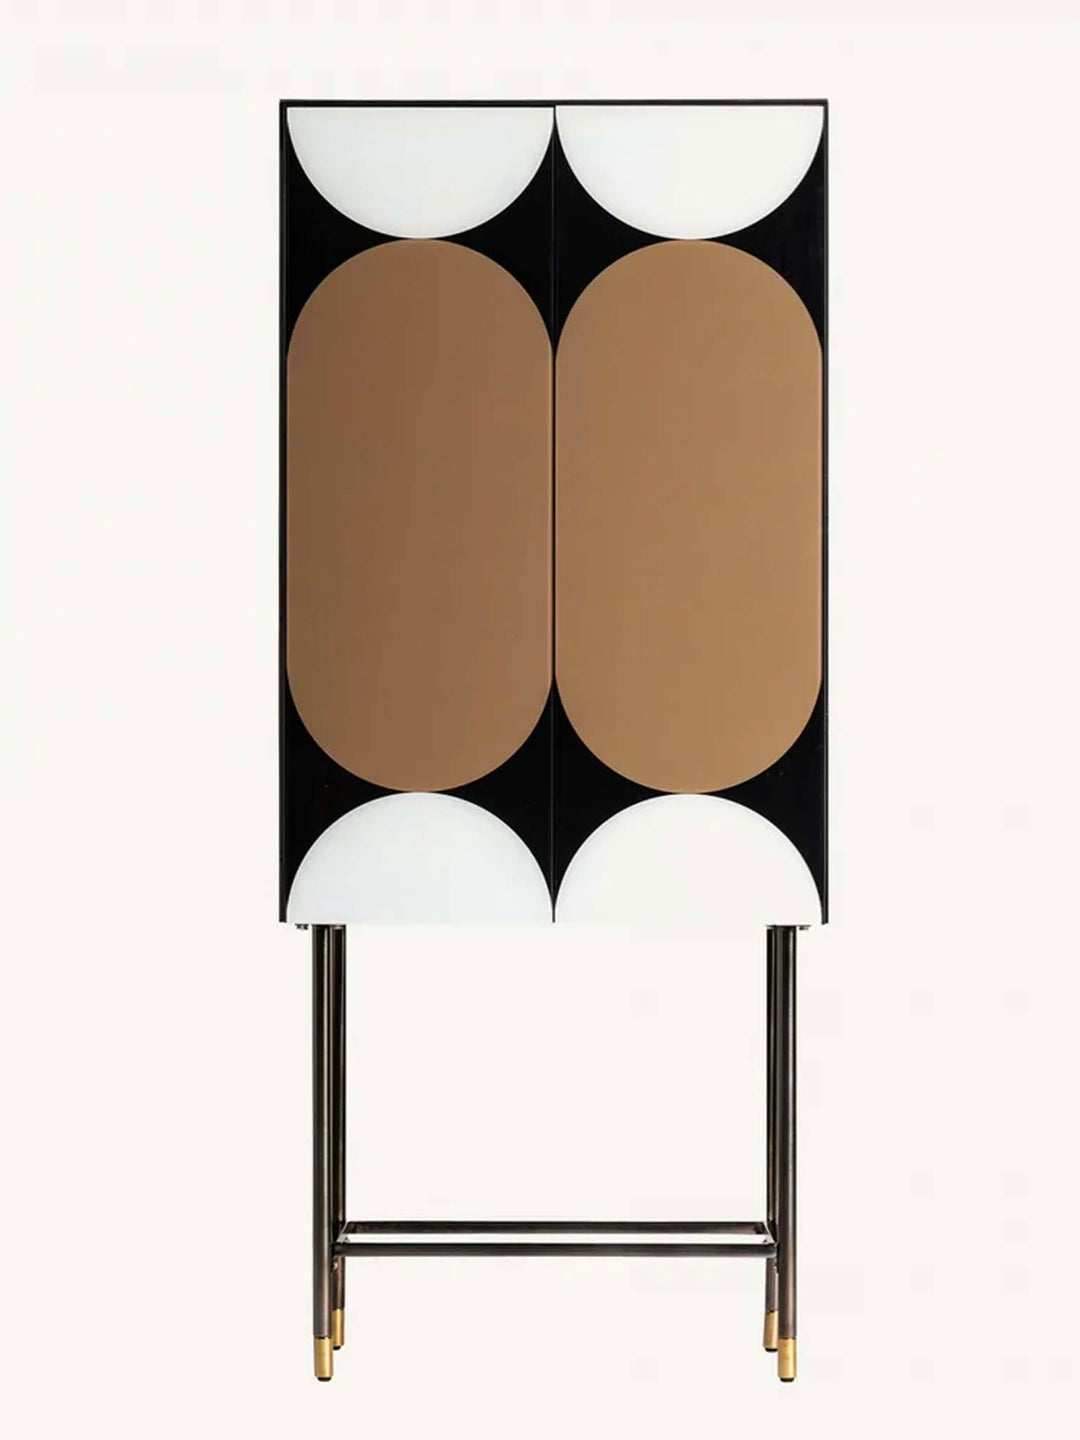 Luxury Art-Deco Bar Cabinet, Art Nouveau Inspired Furniture